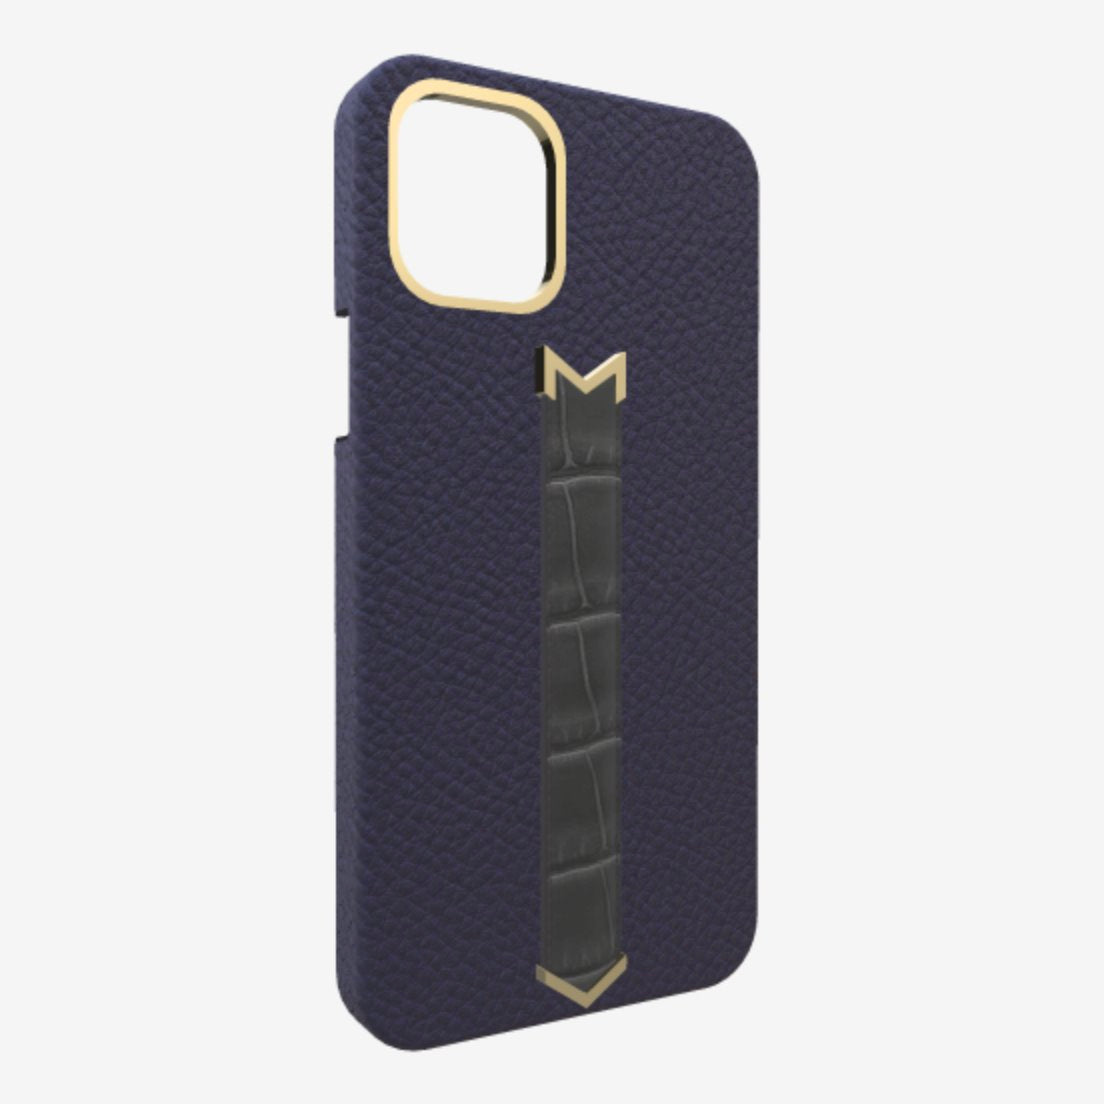 Gold Finger Strap Case for iPhone 13 Pro in Genuine Calfskin and Alligator Navy Blue Elite Grey 